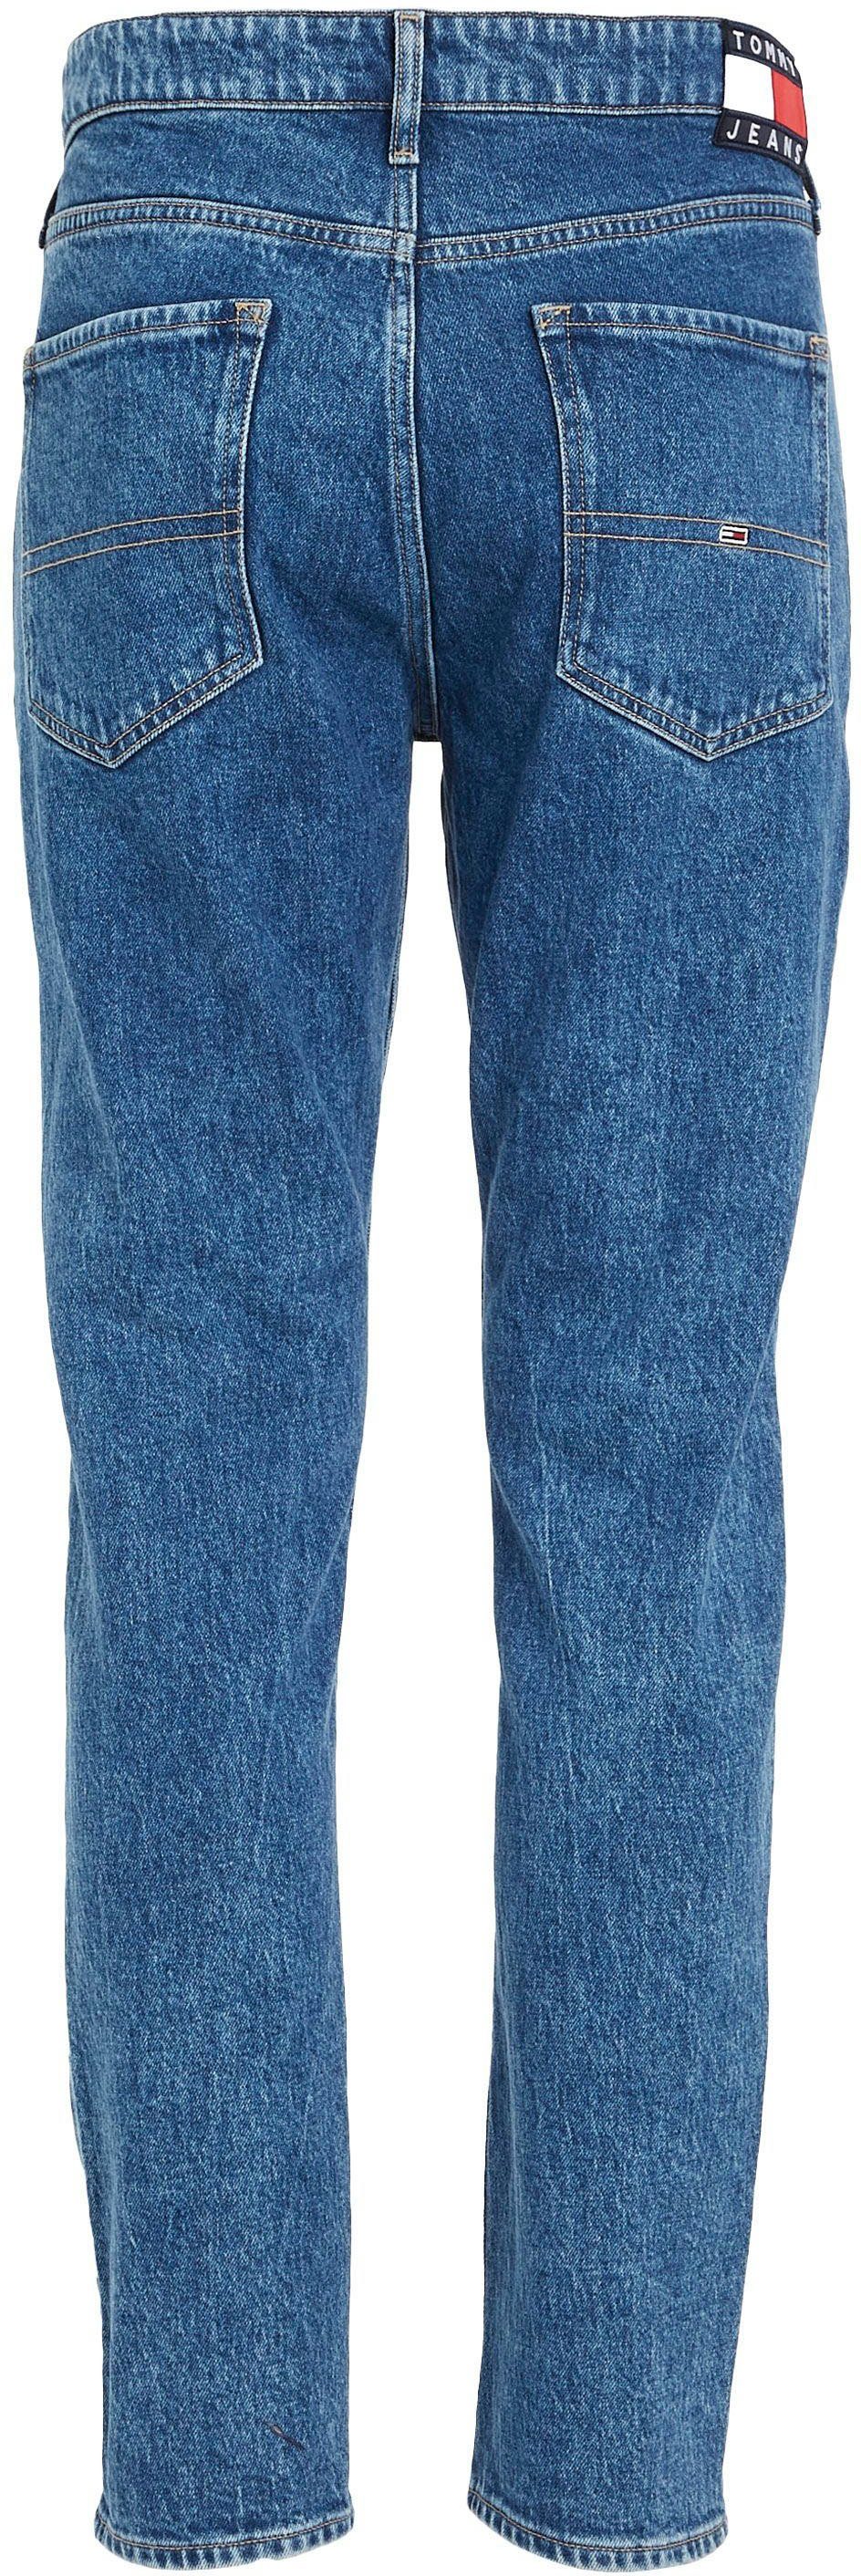 Medium Y SCANTON Denim Tommy 5-Pocket-Jeans SLIM Jeans